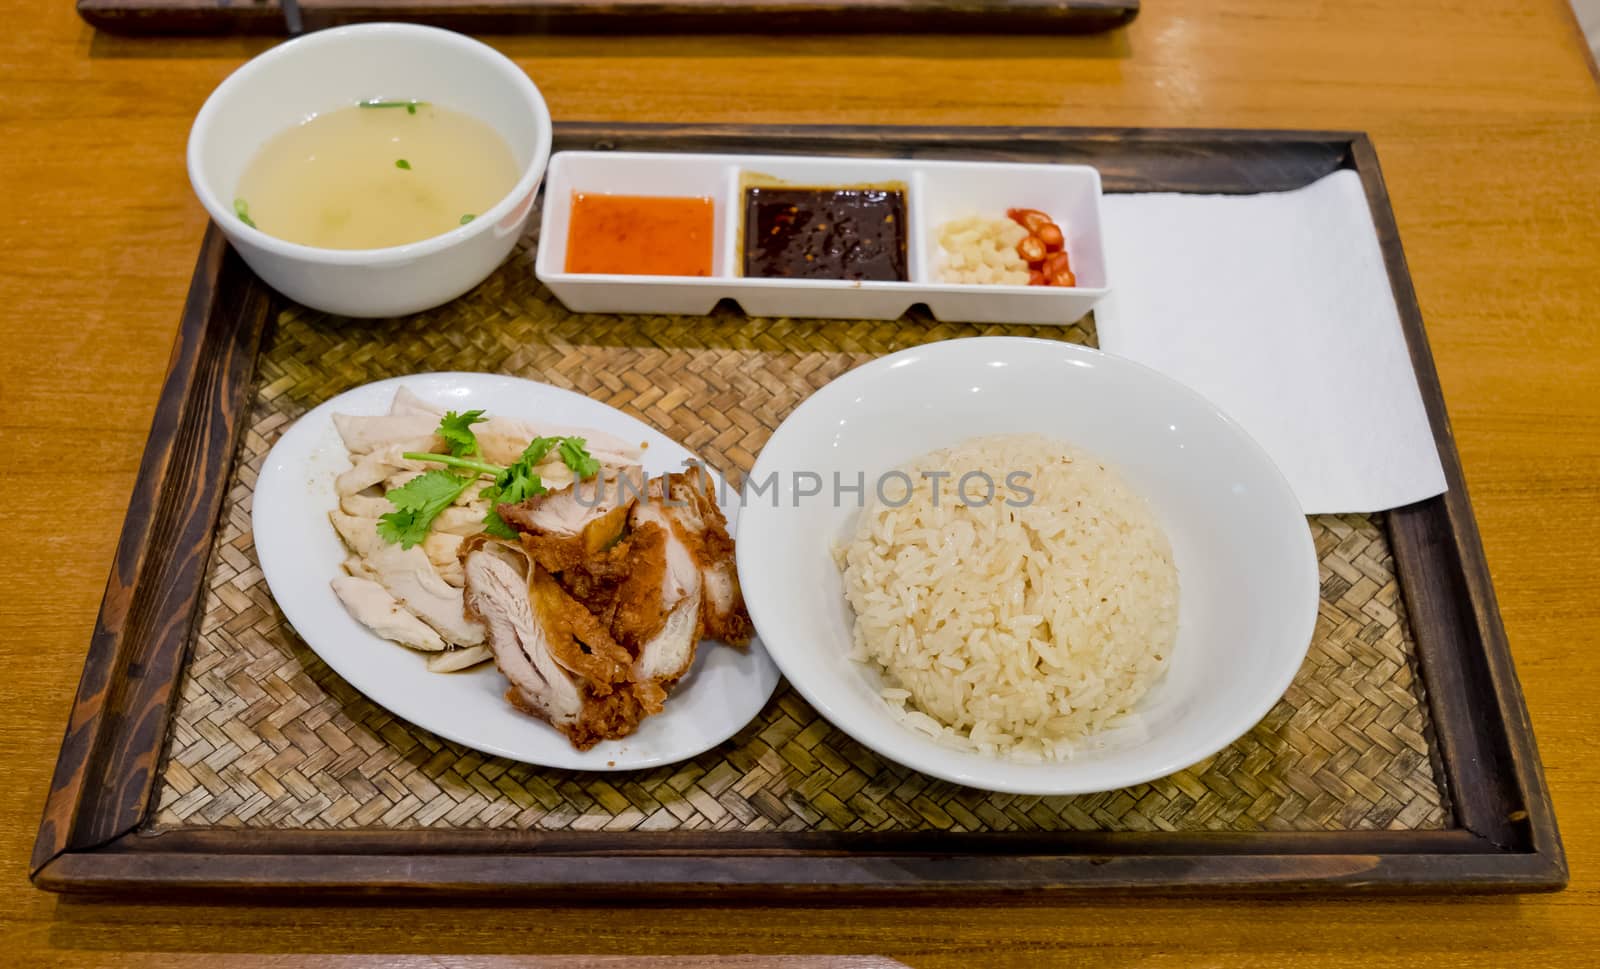 Hainanese Chicken Rice - Mixed Boil Chicken and Crisy Chicken